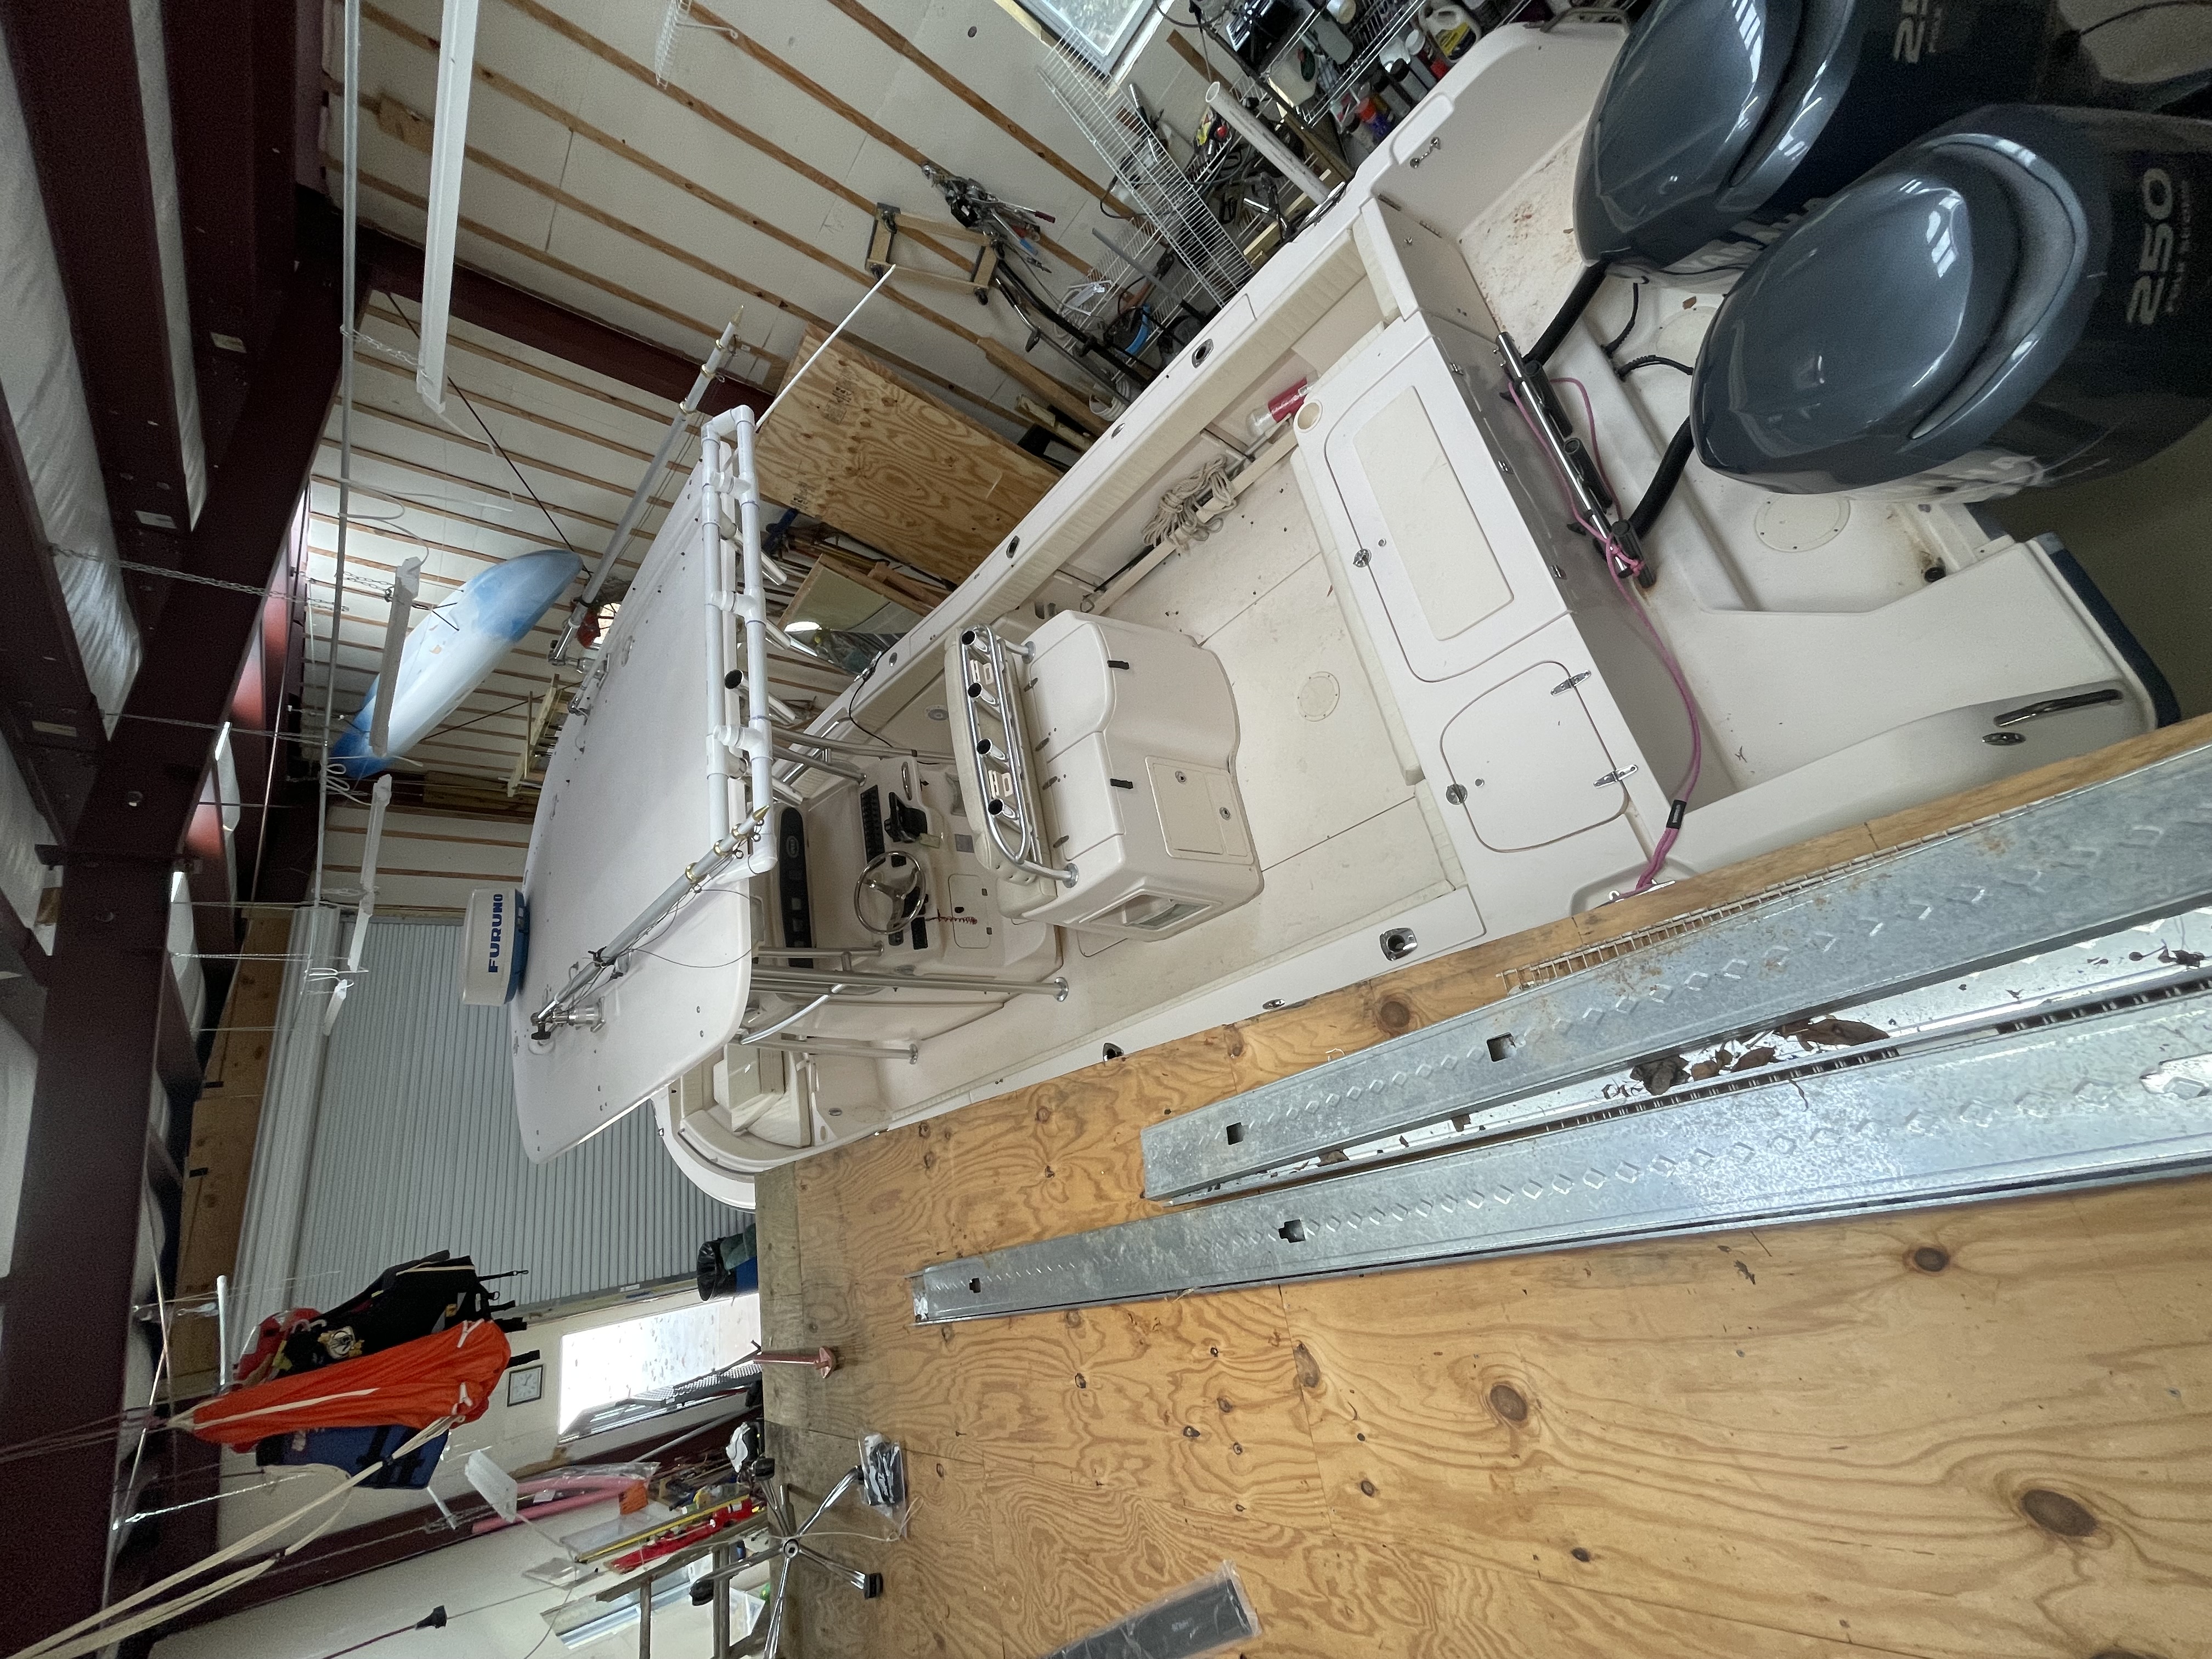 2007 Grady-White 283 Release Power boat for sale in Gainesville, GA - image 9 